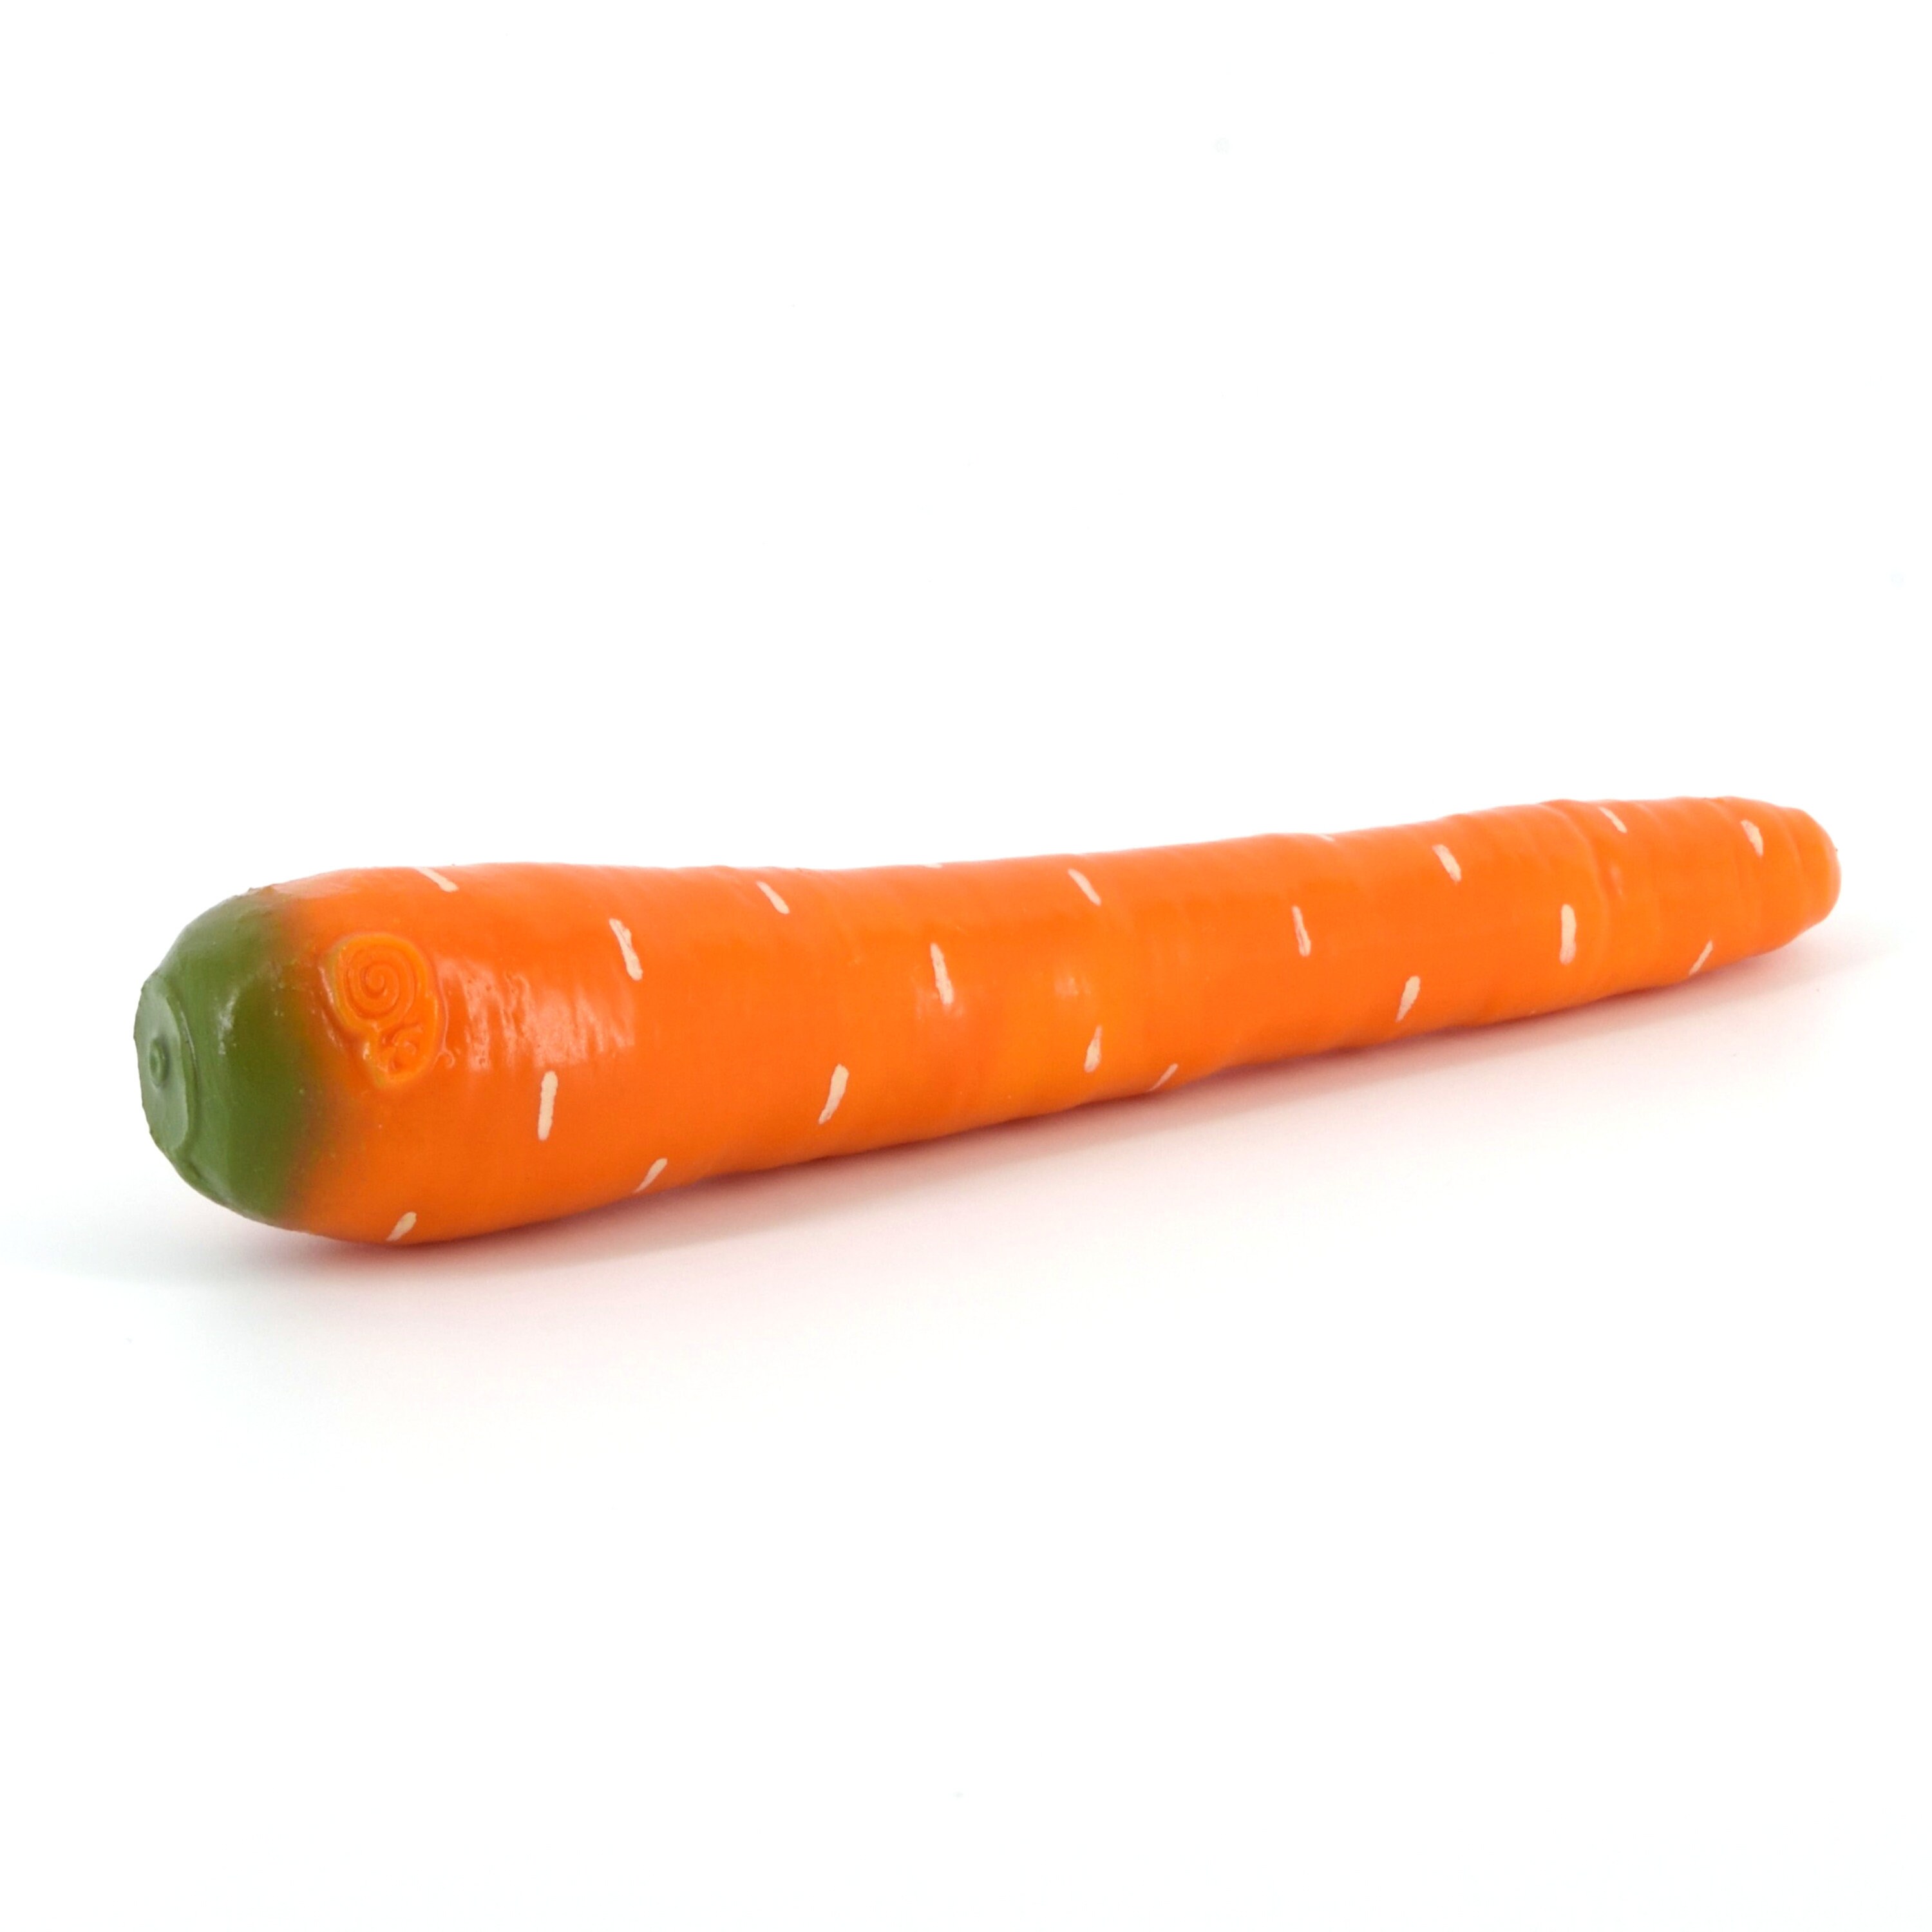 Carrot dildo